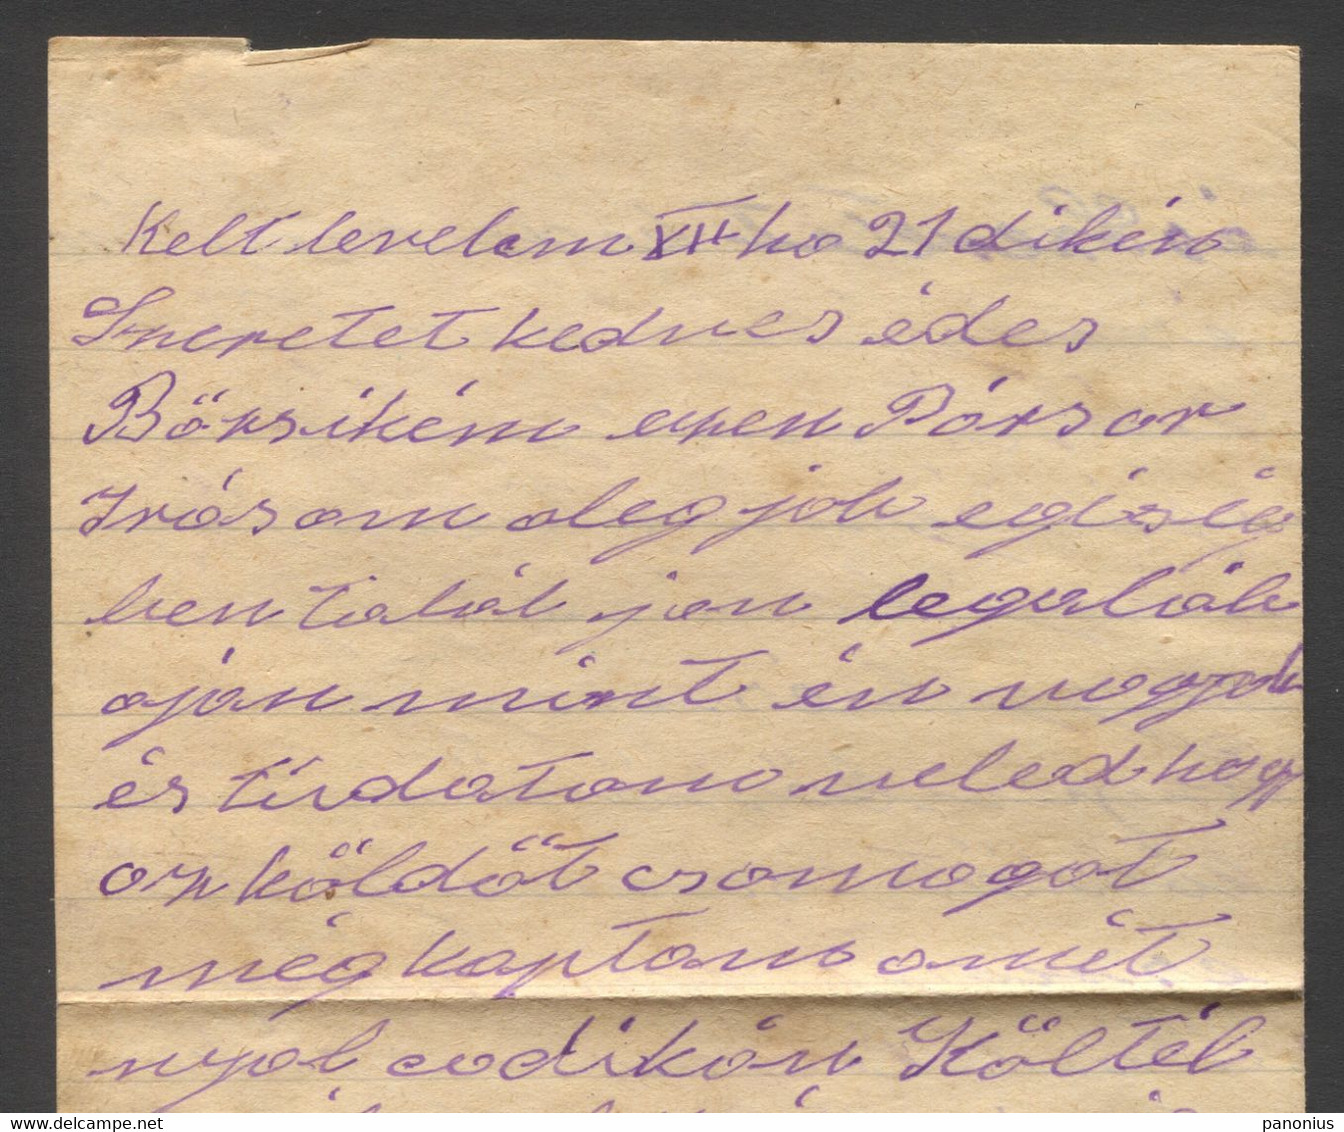 Hungary WW2  Year 1943. Censorship Cenzura, Traveled To Bezdan Bacska With Content - Banat-Bacska